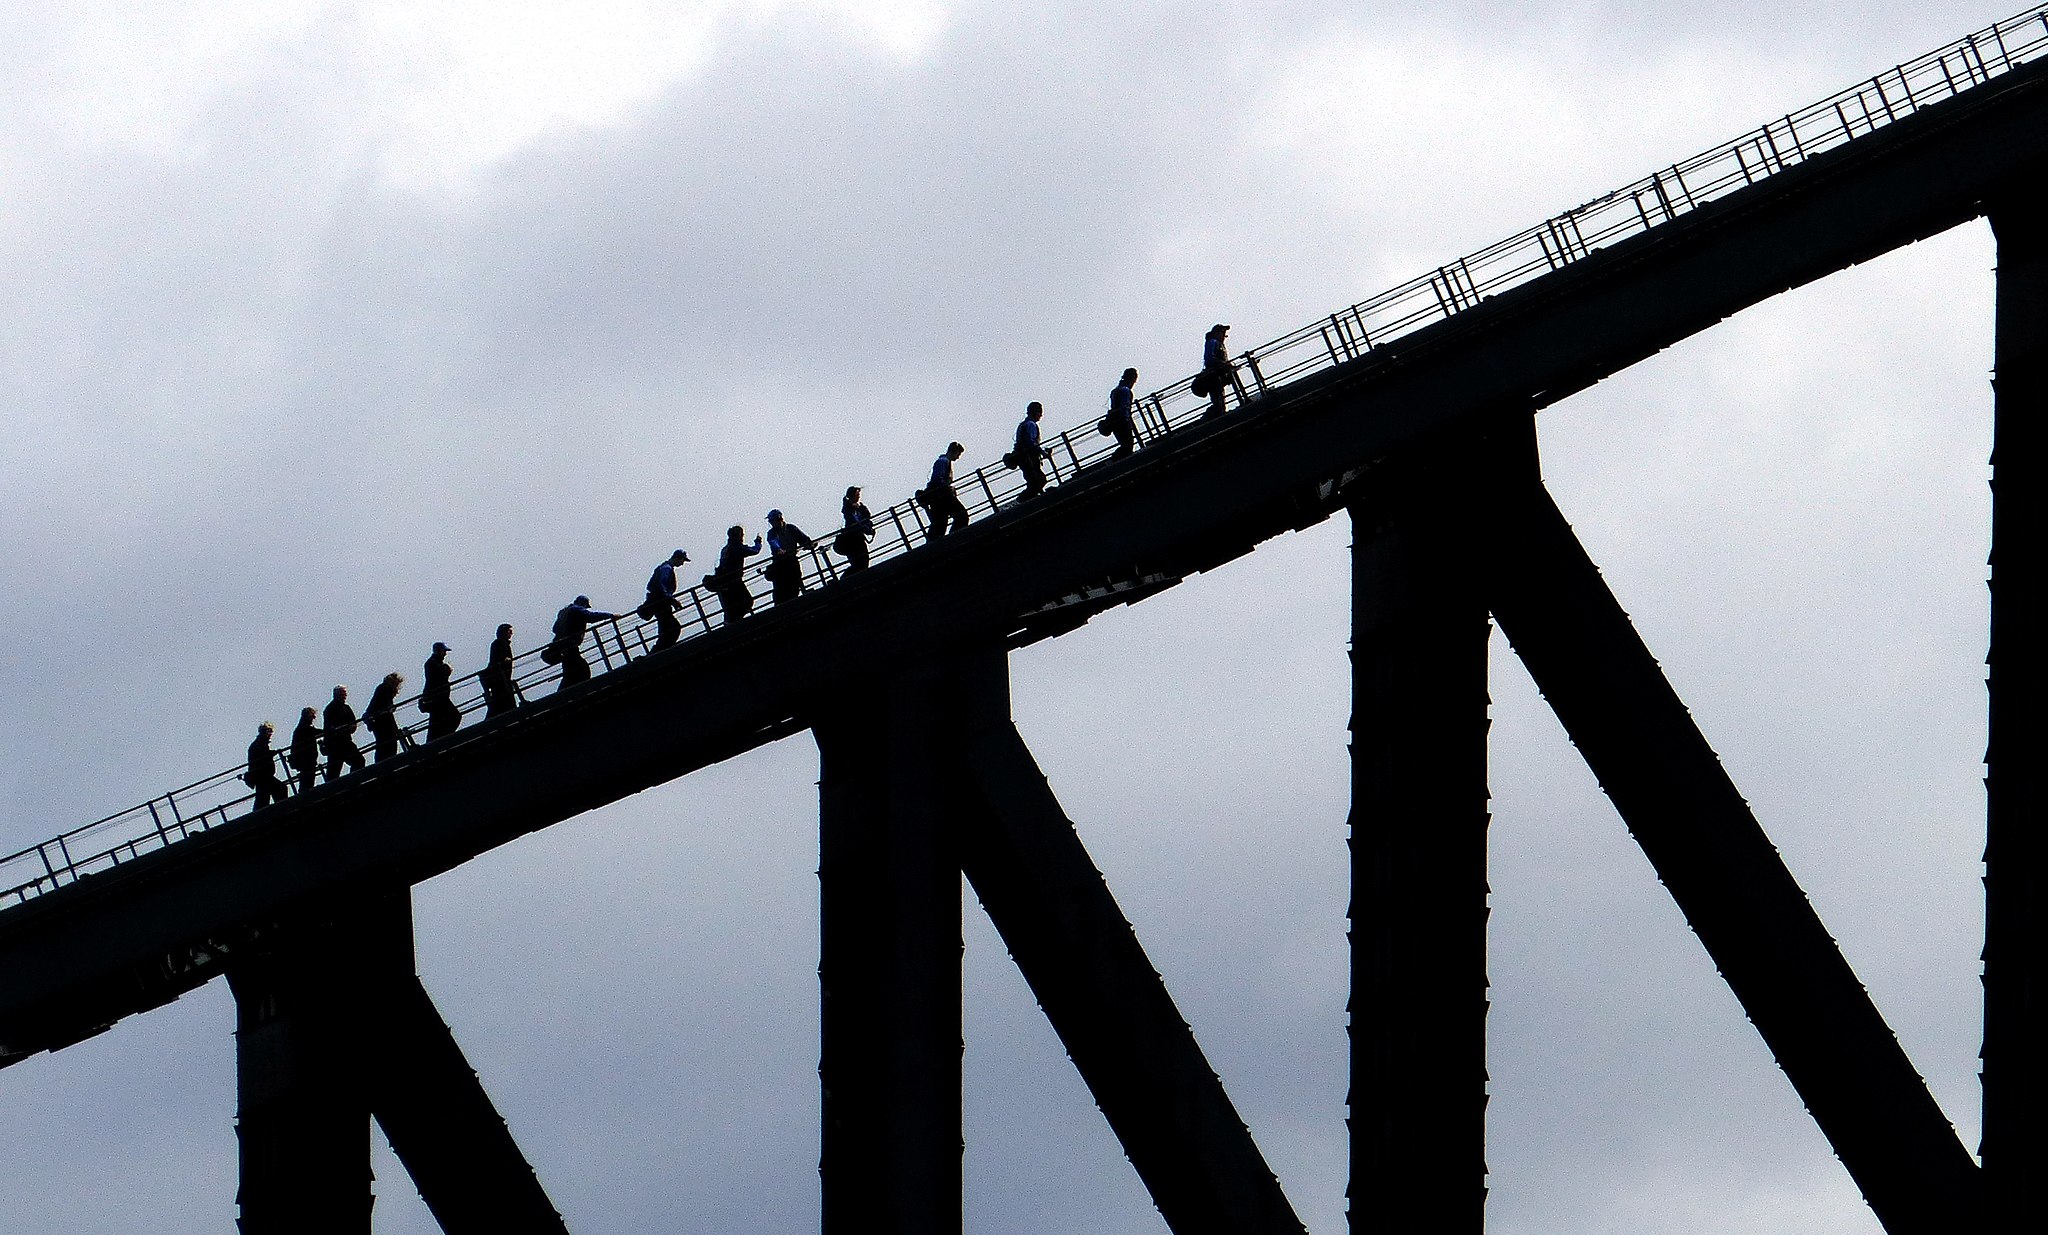 Team of workers climbing a bridge